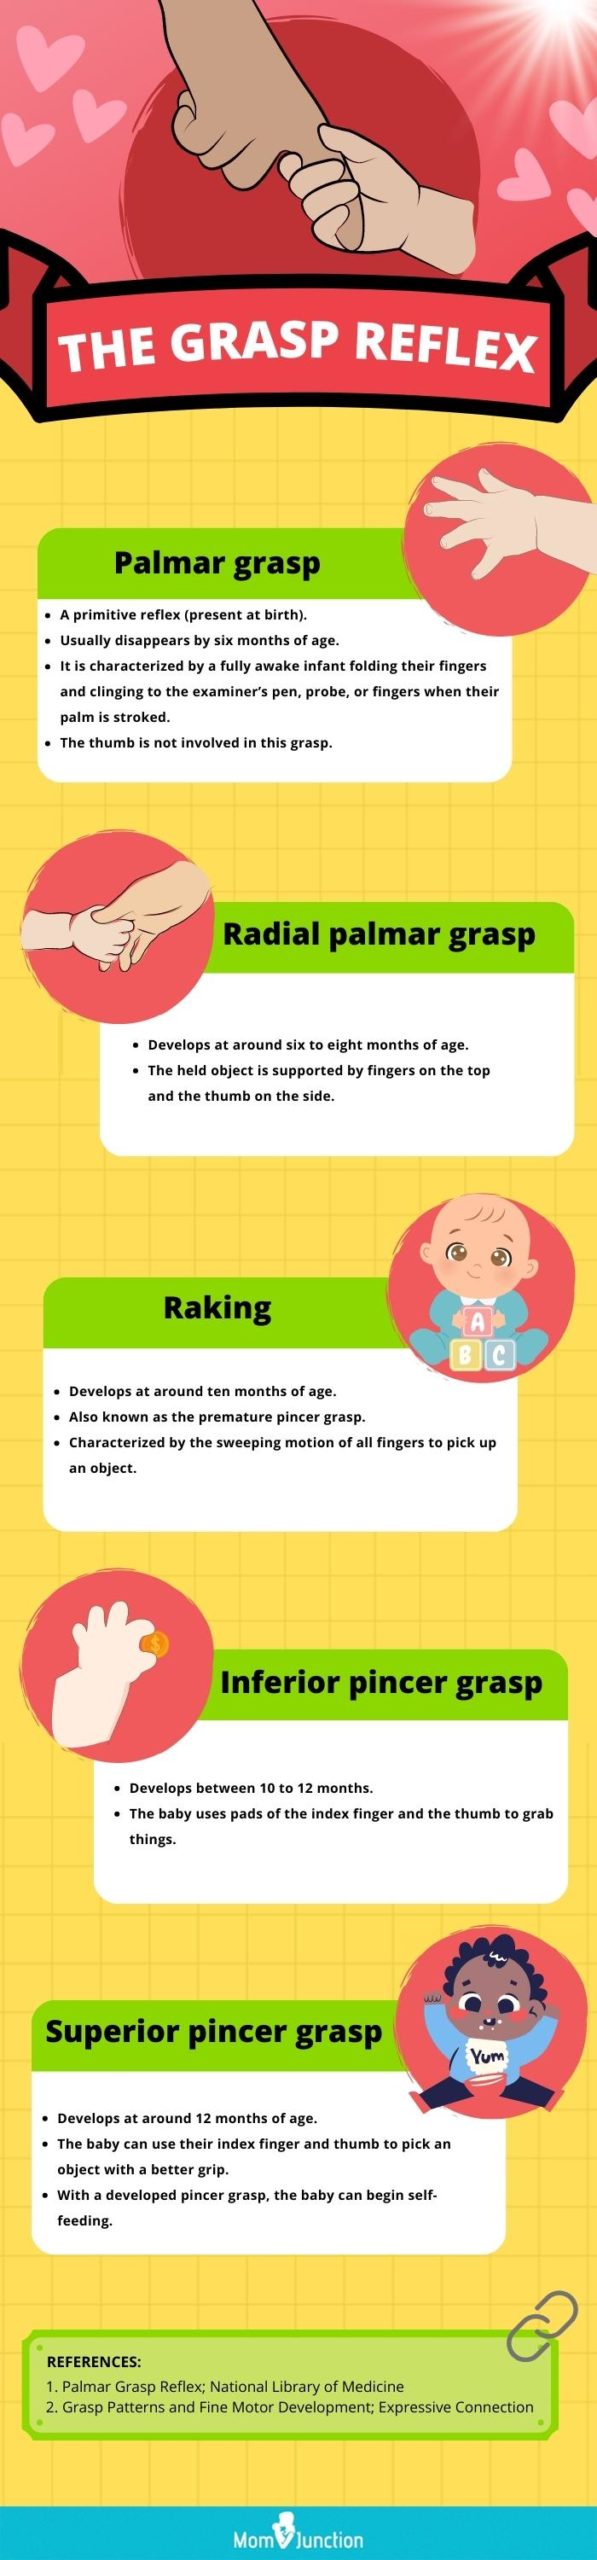 grasp reflex in babies [infographic]